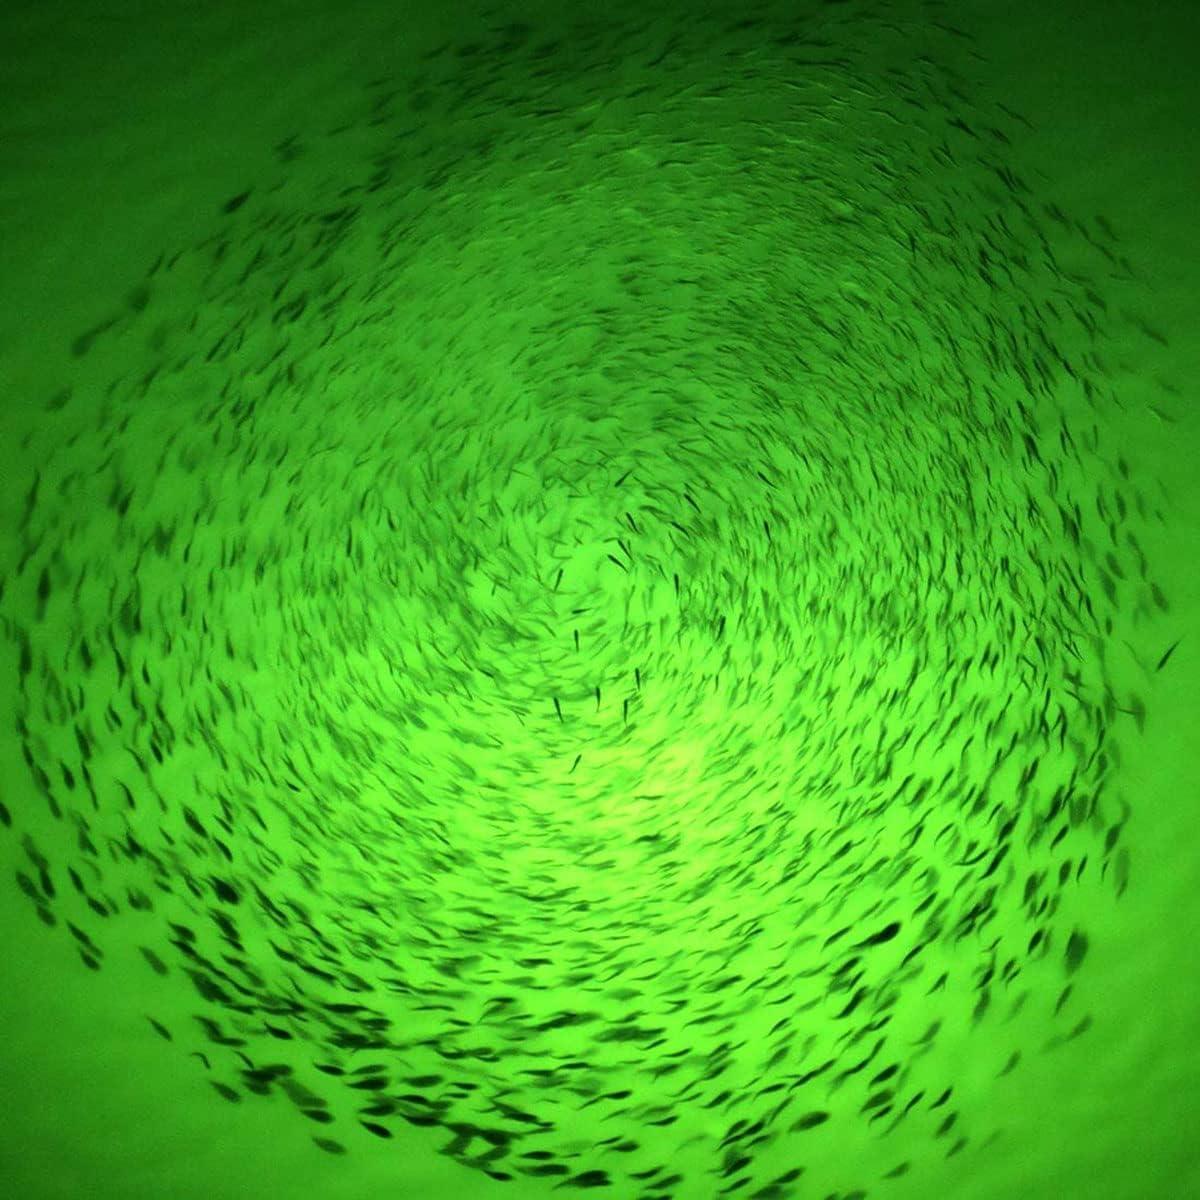 Underwater Fishing LED Light 15w,12v,Green Light IP68 Waterproof Lamp 360  Degree All-Round Underwater Lighting Fish Light Collection Fish Lamp for Underwater  Lighting, Night Fishing, Lure